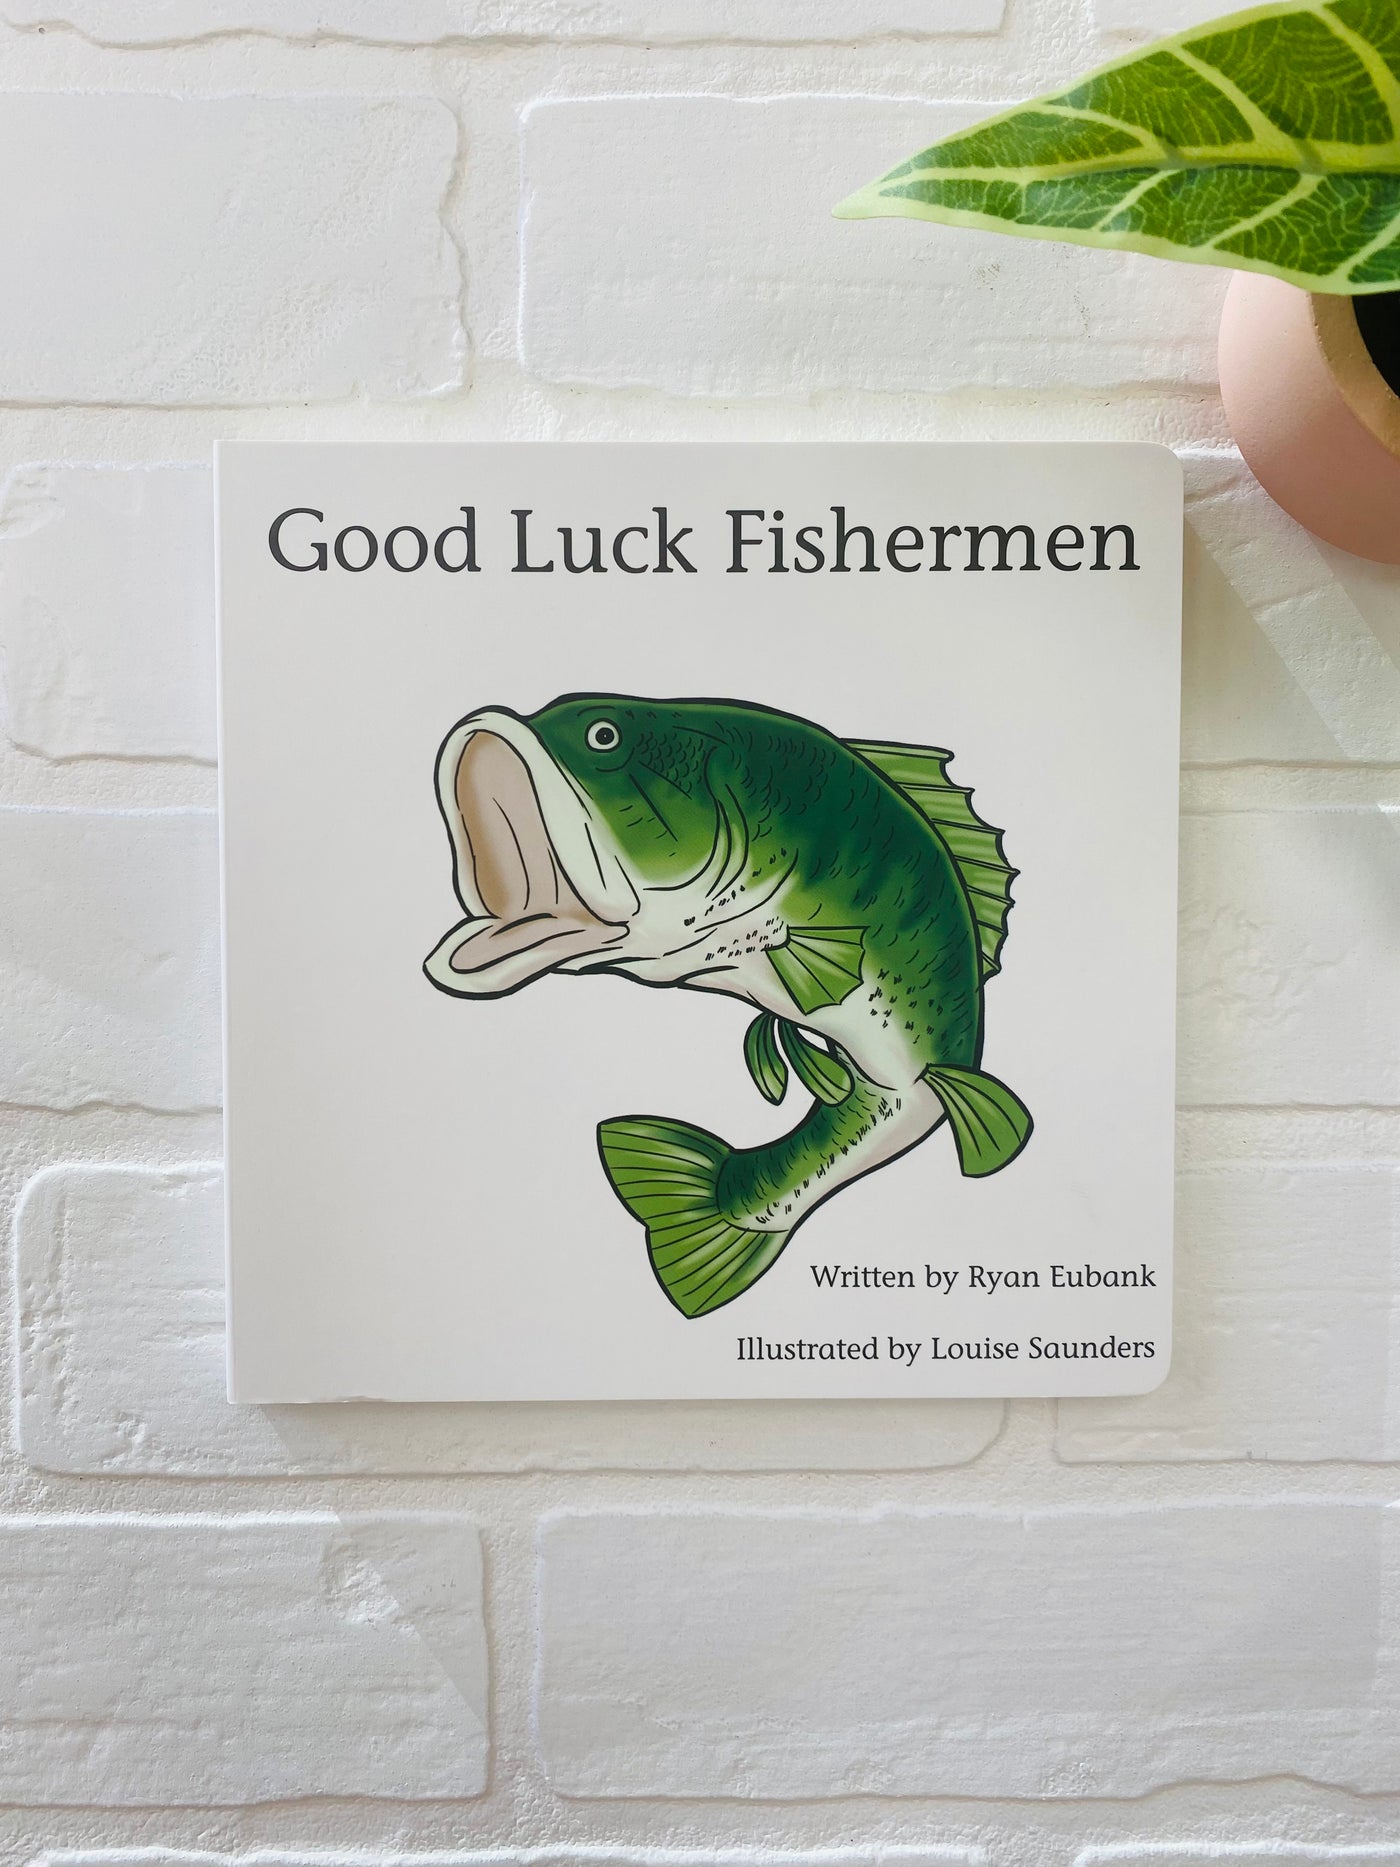 Good luck fisherman